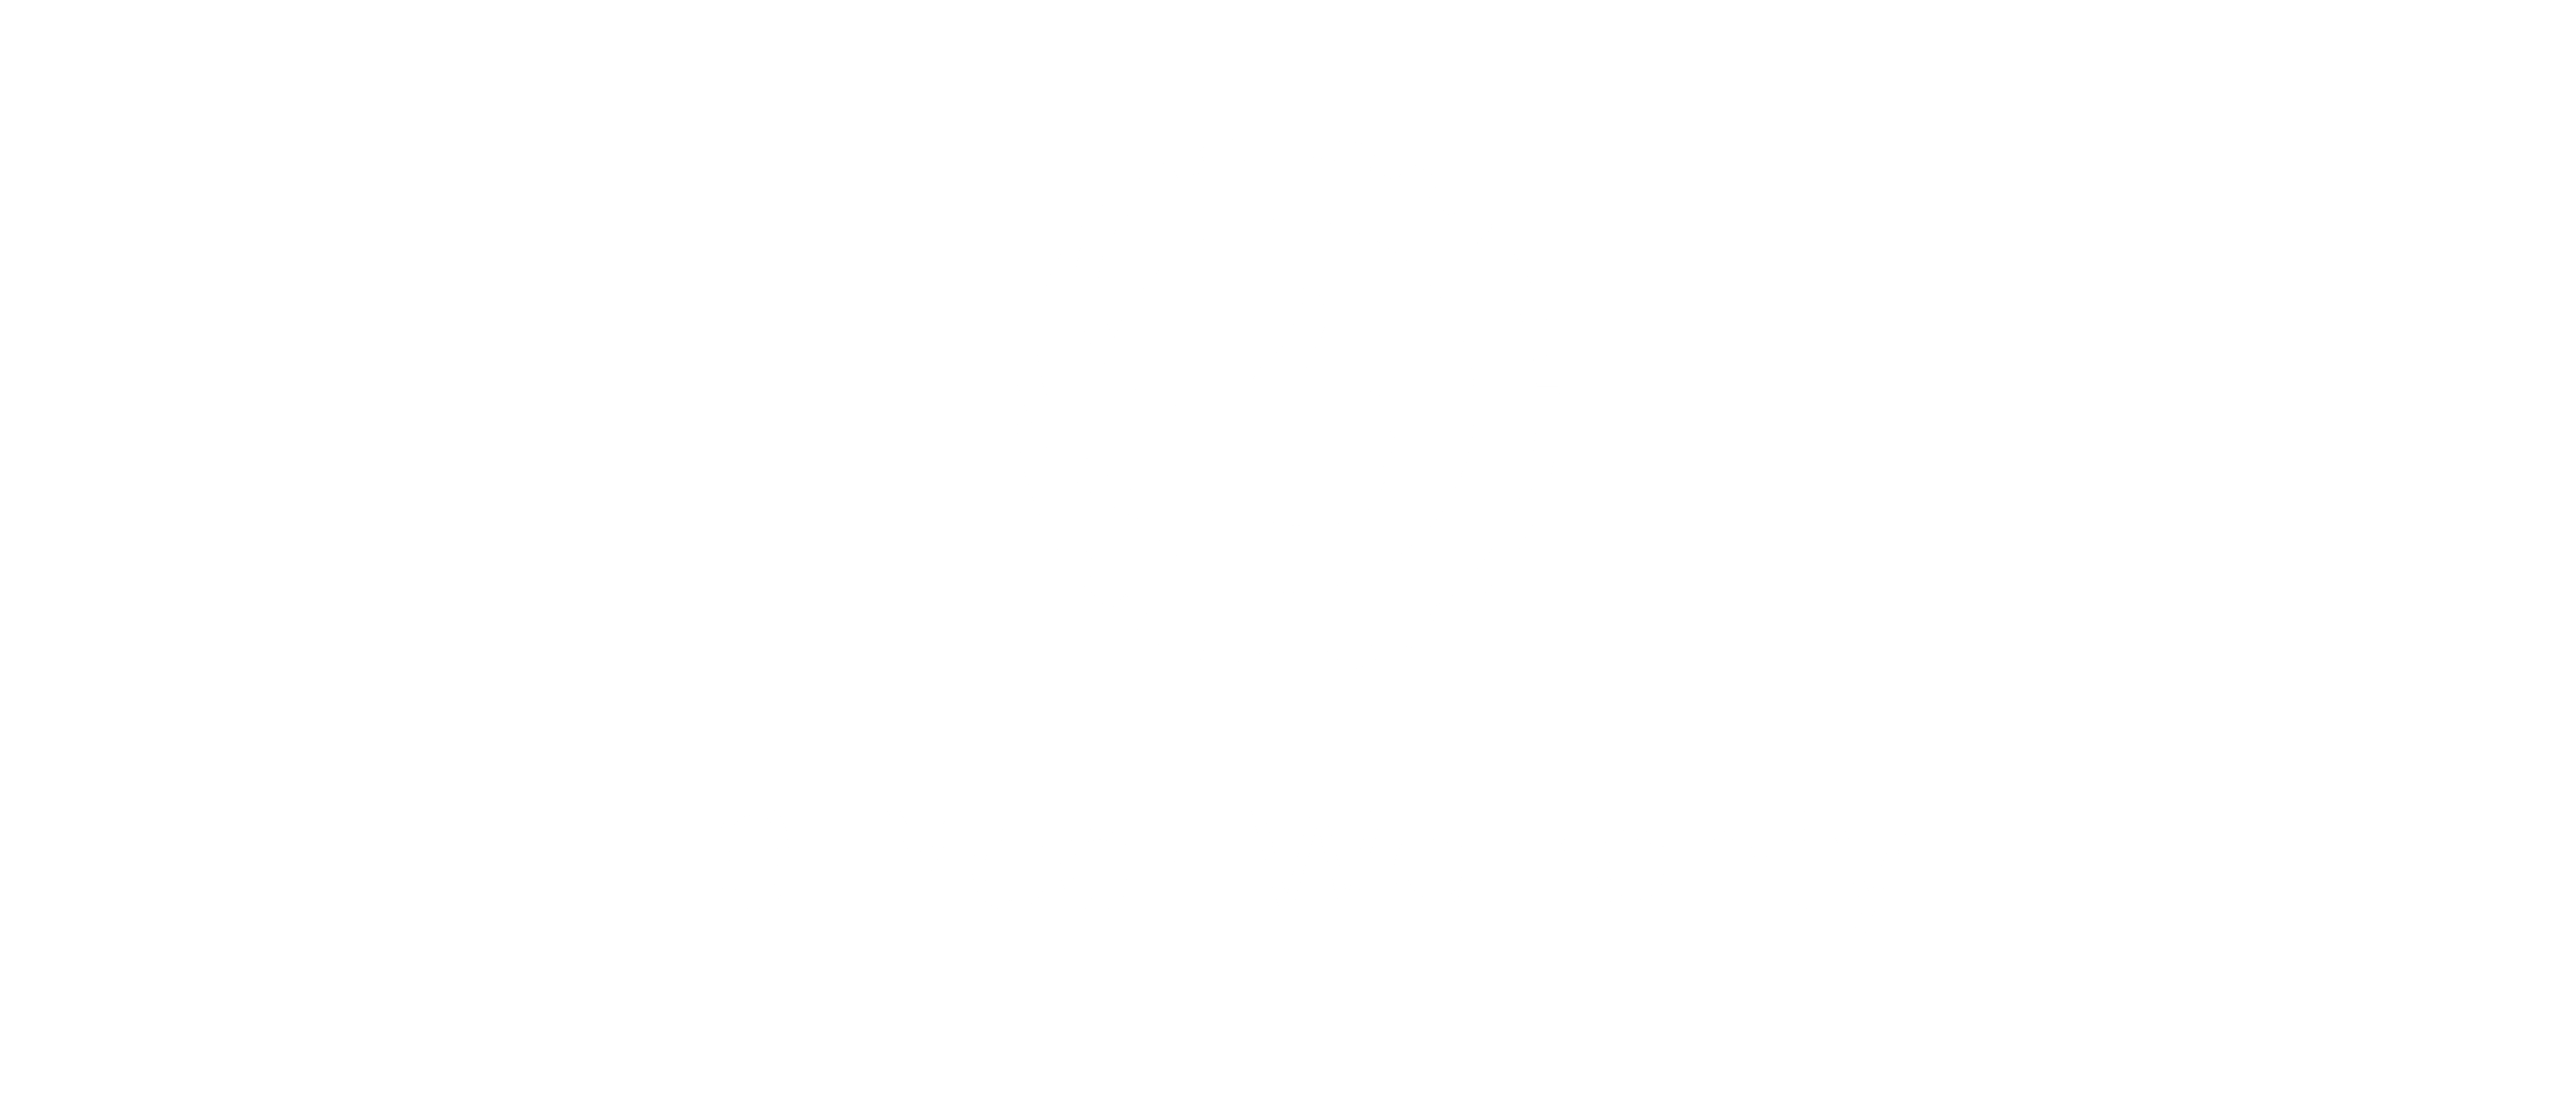 10-year warranty.